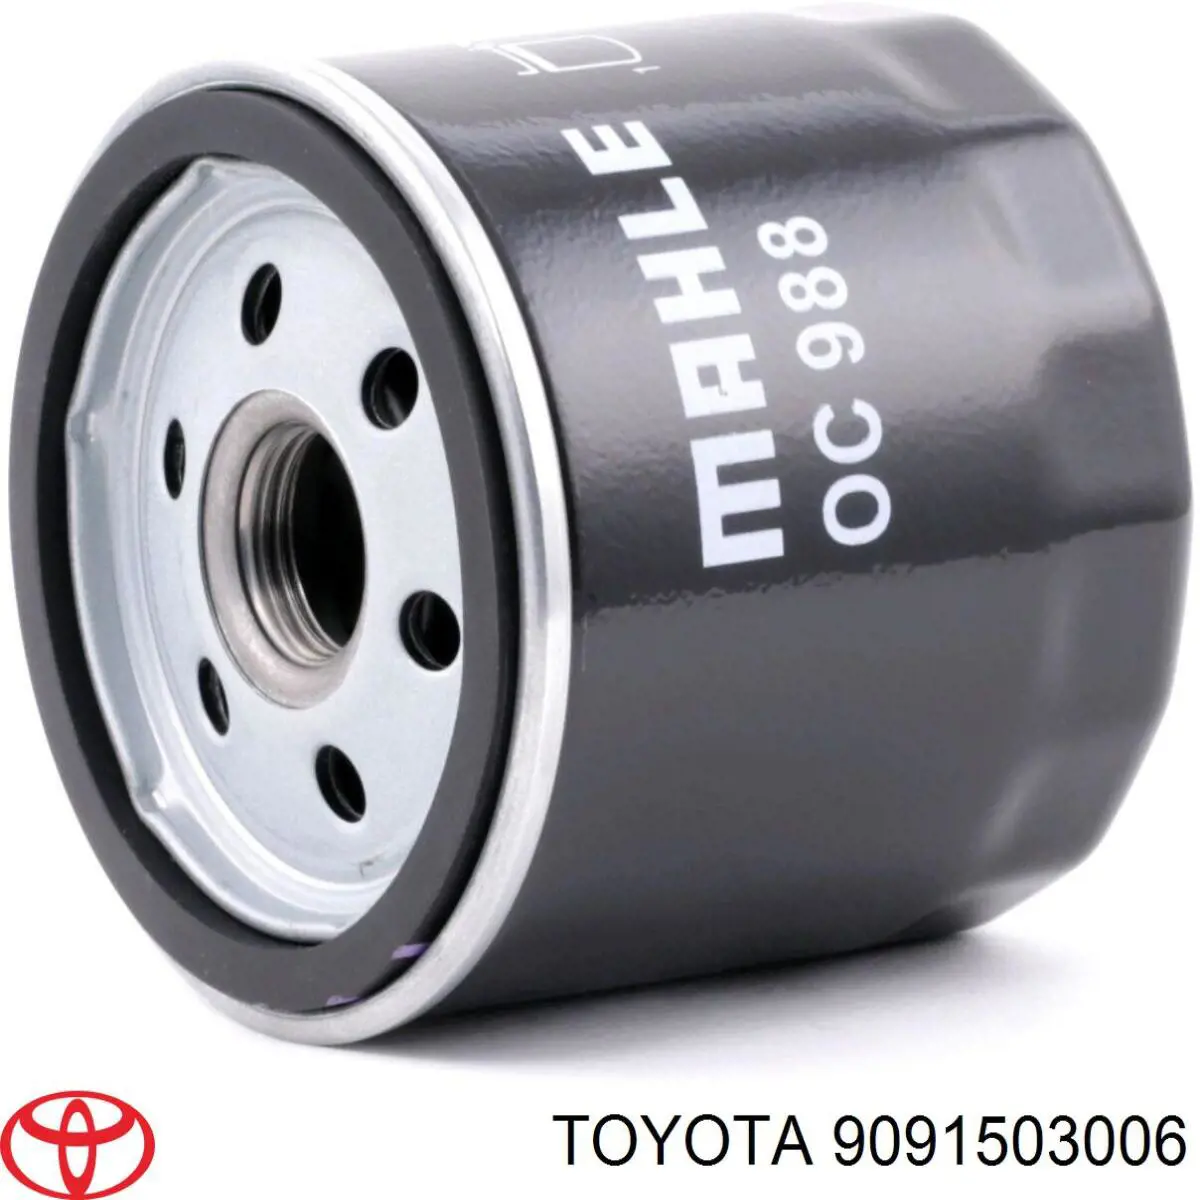 9091503006 Toyota filtro de aceite